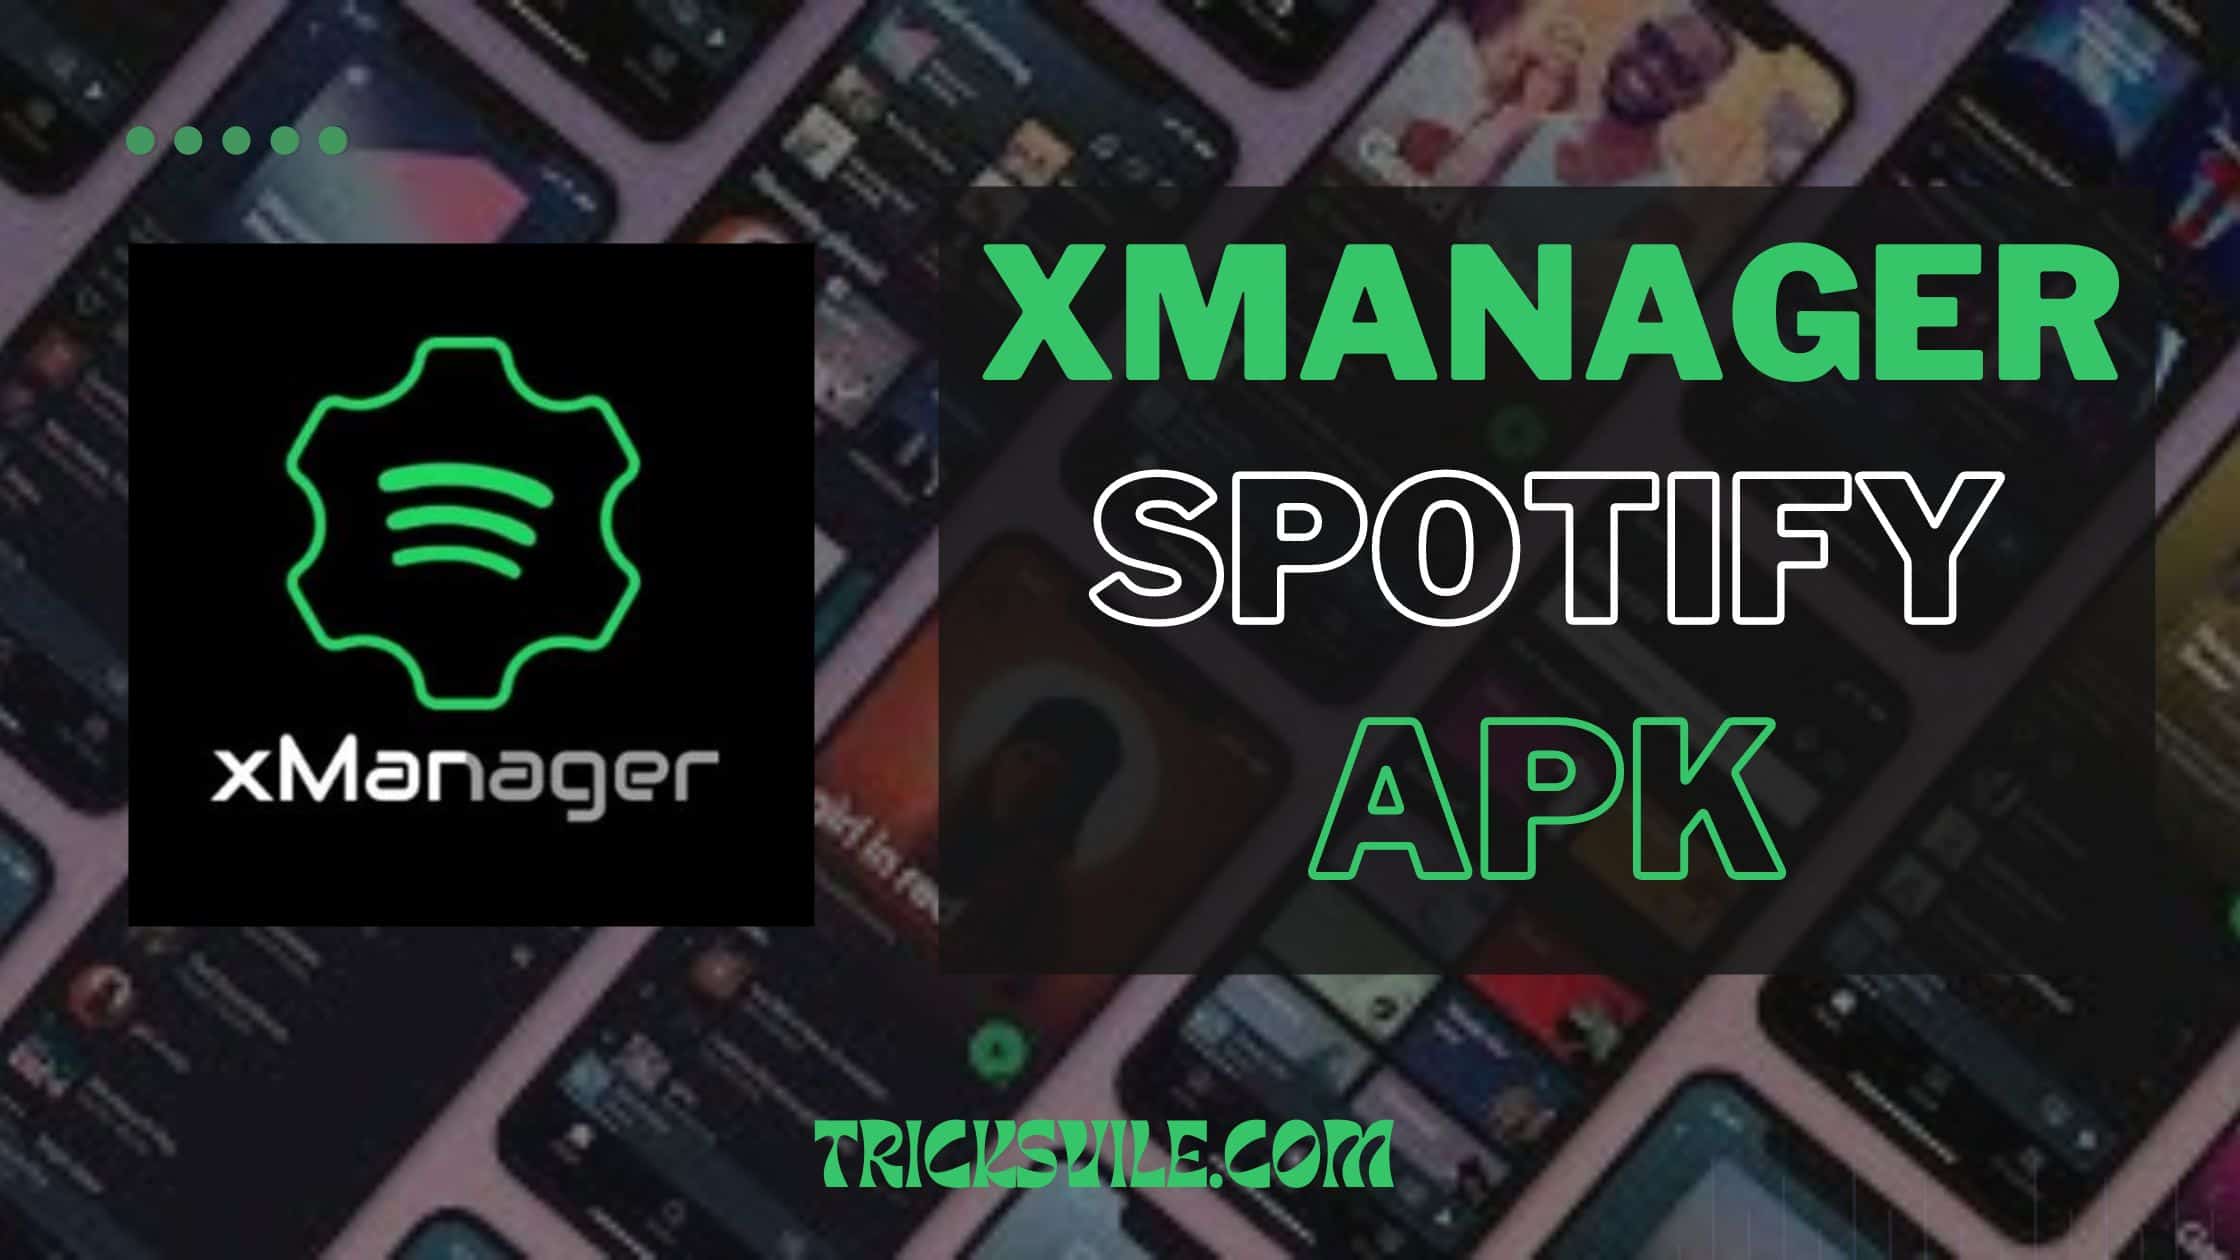 Xmanager Spotify apk